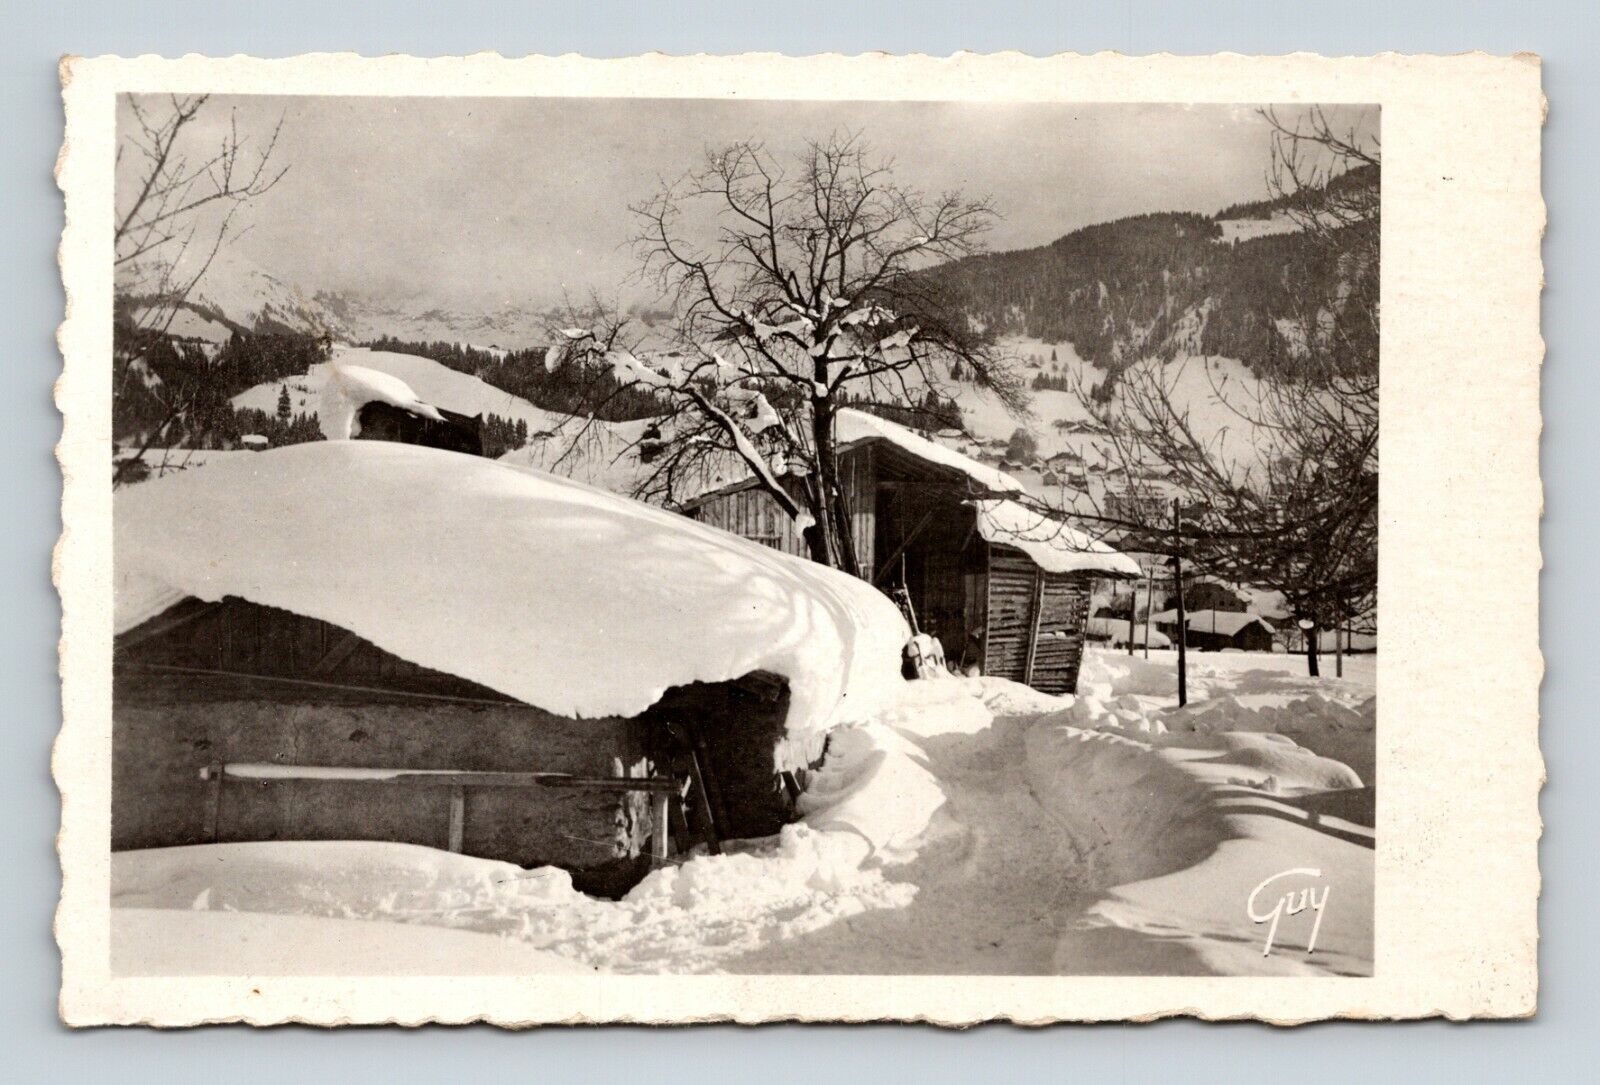 Snow Covered Cottages Editions d'Art GUY Paris RPPC